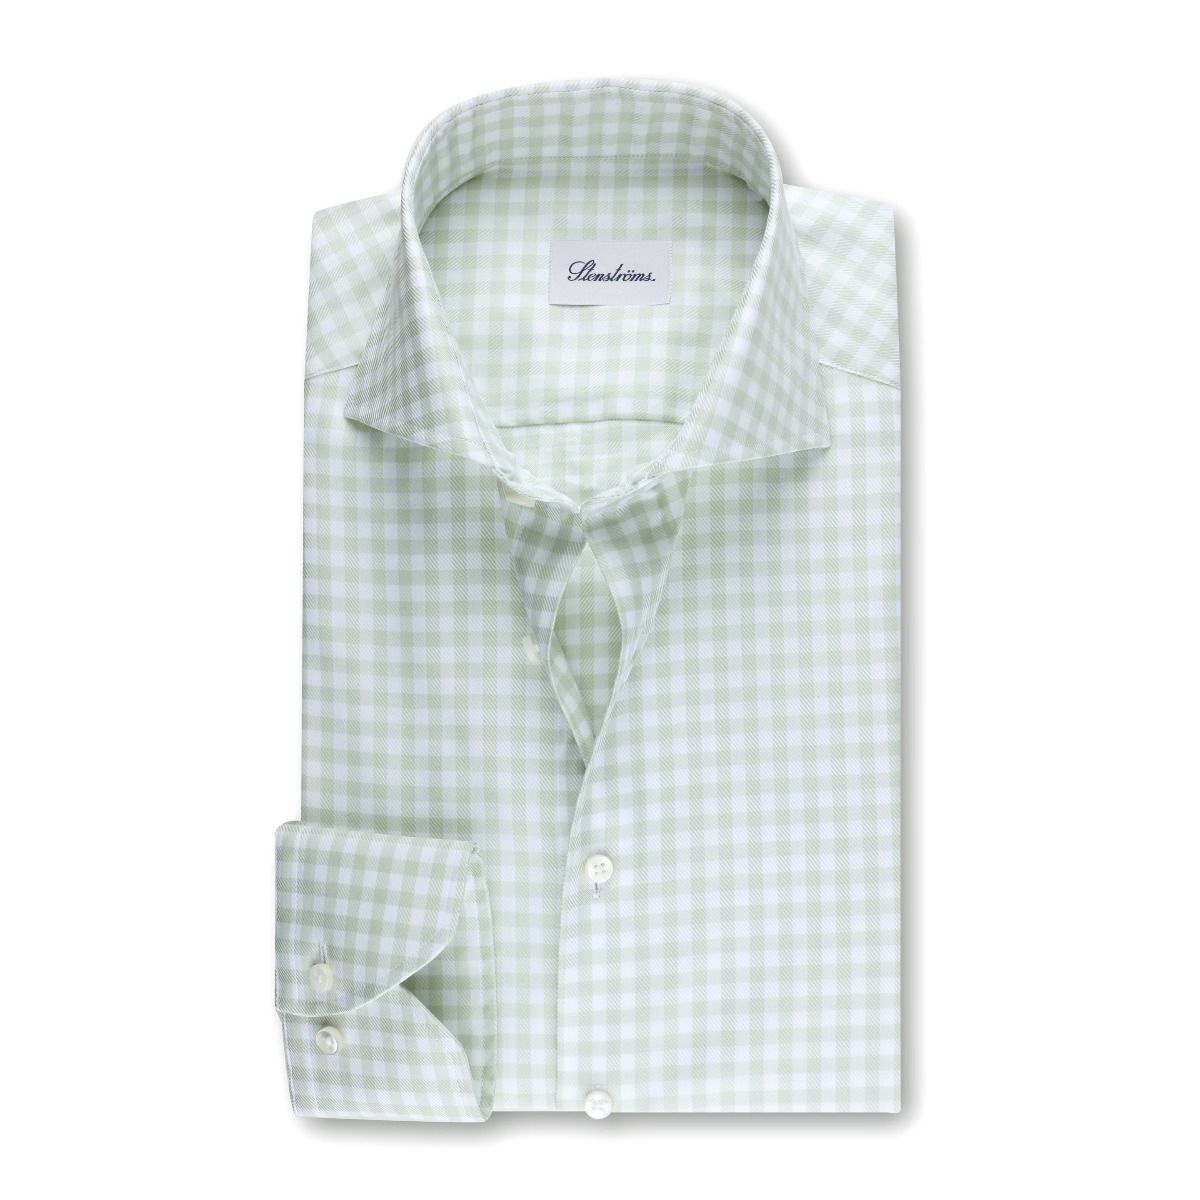 Green White Gingham Shirt